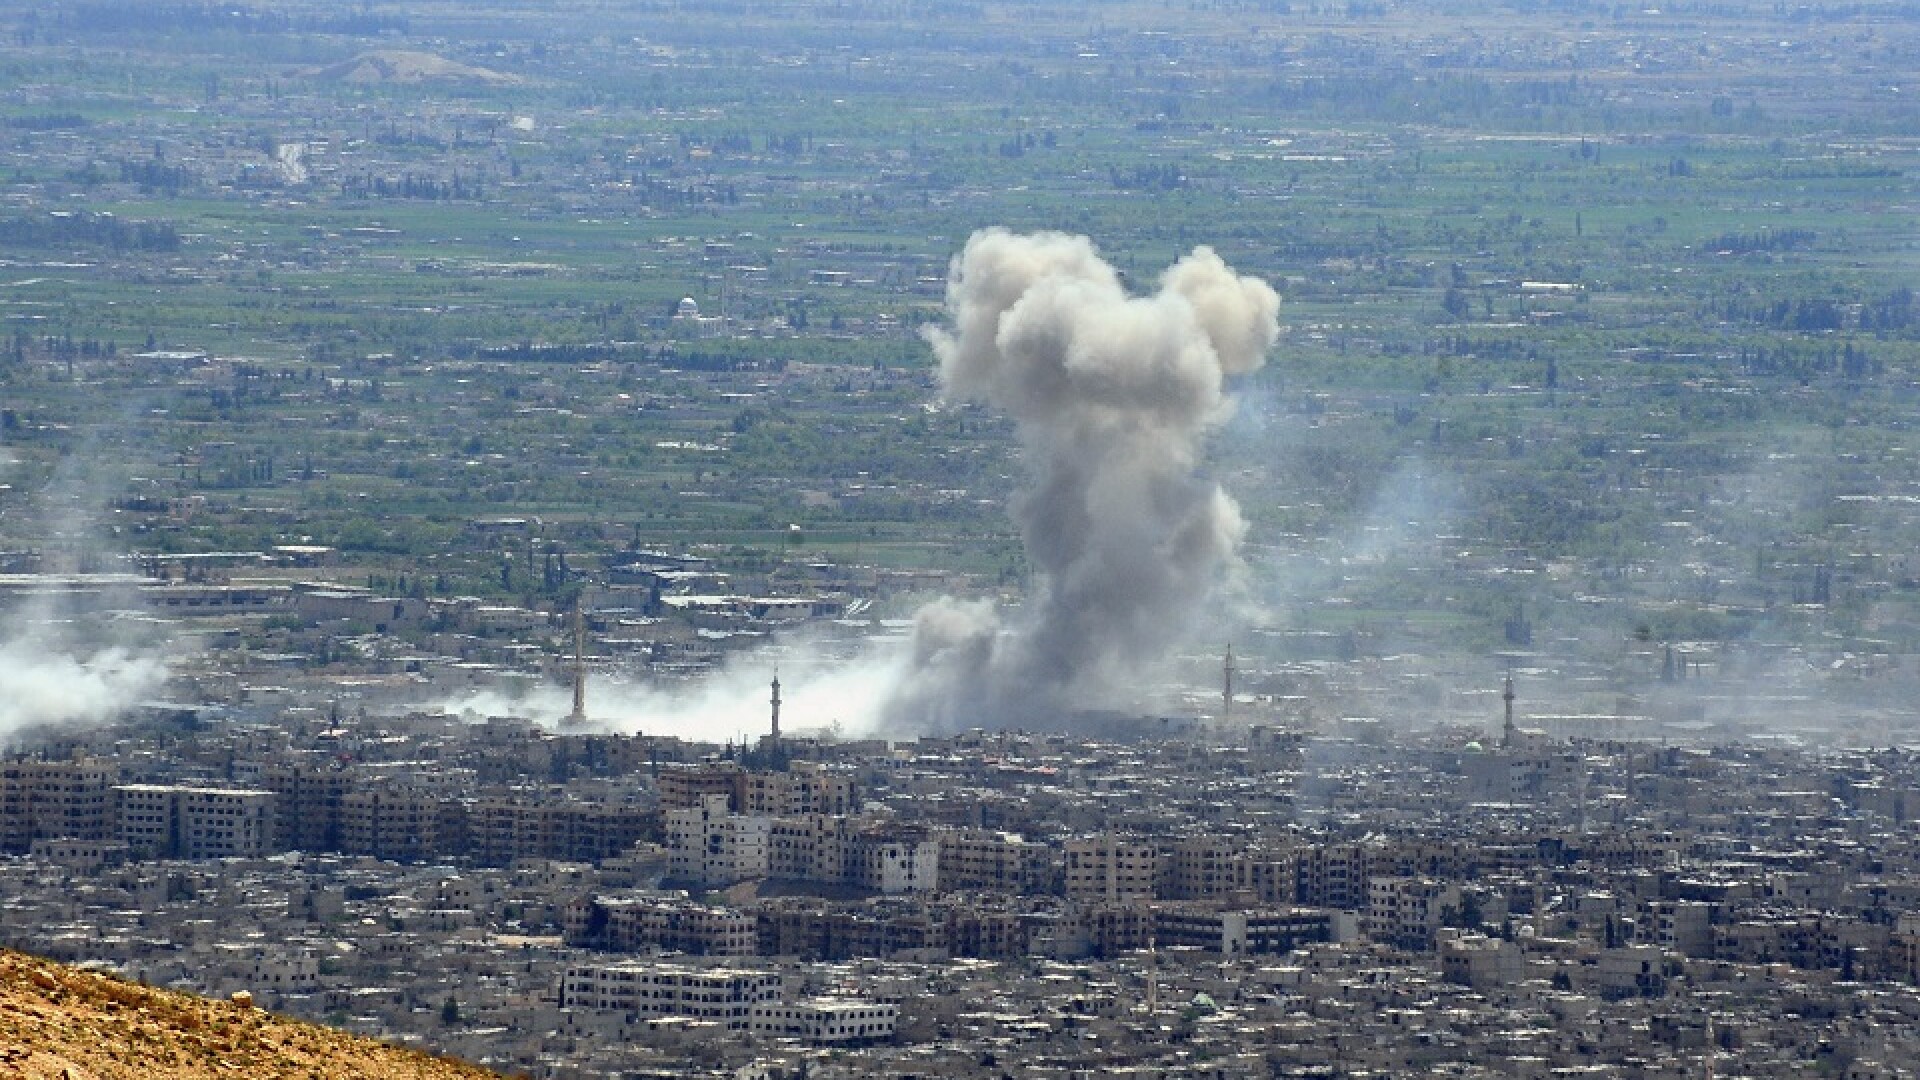 atac asupra orasului douma din siria